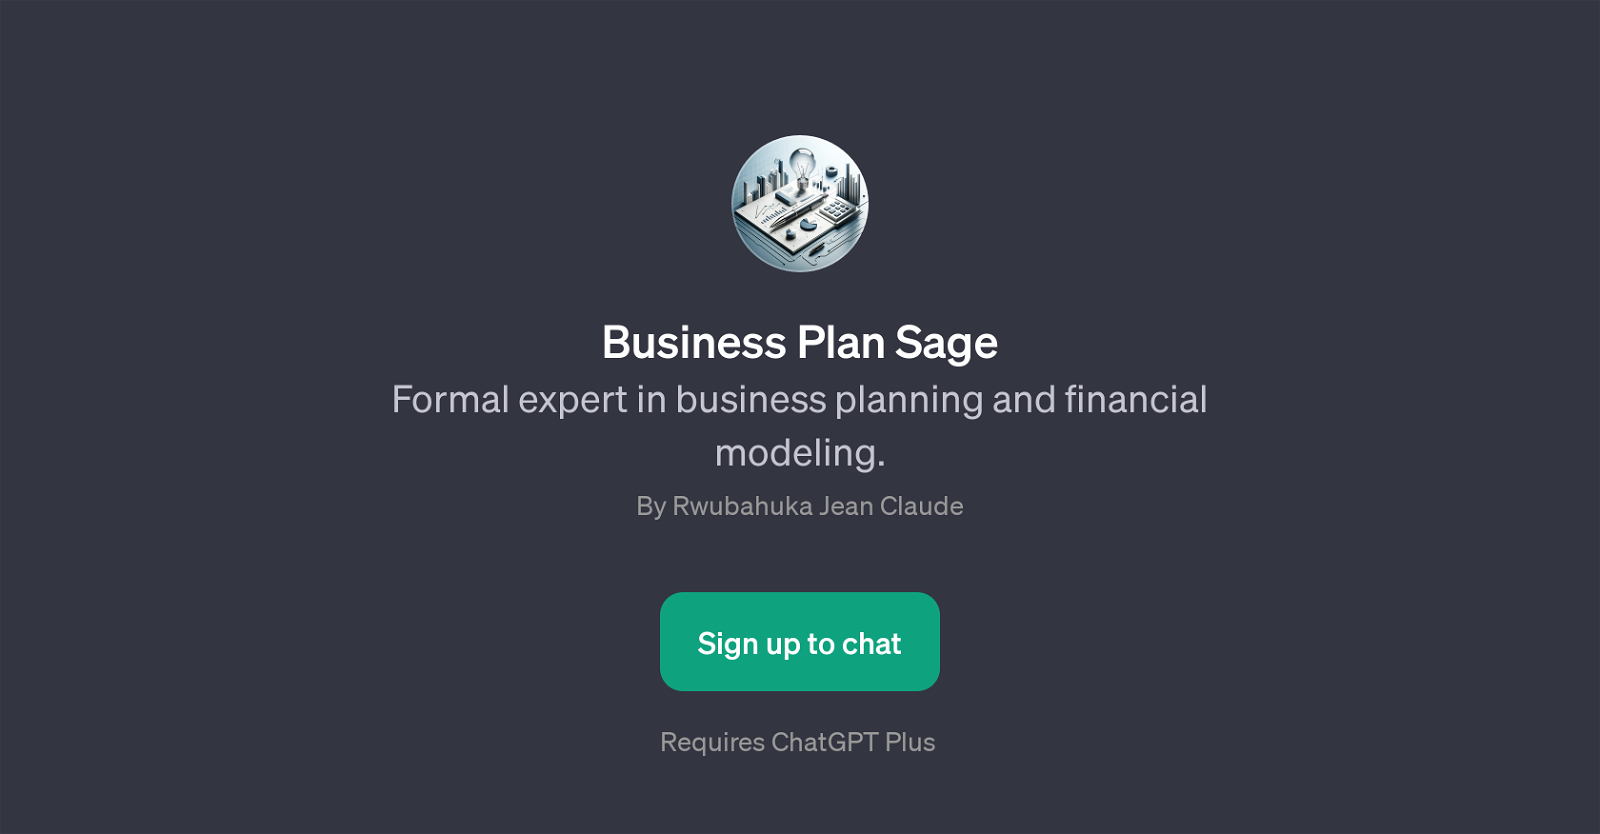 Business Plan Sage website